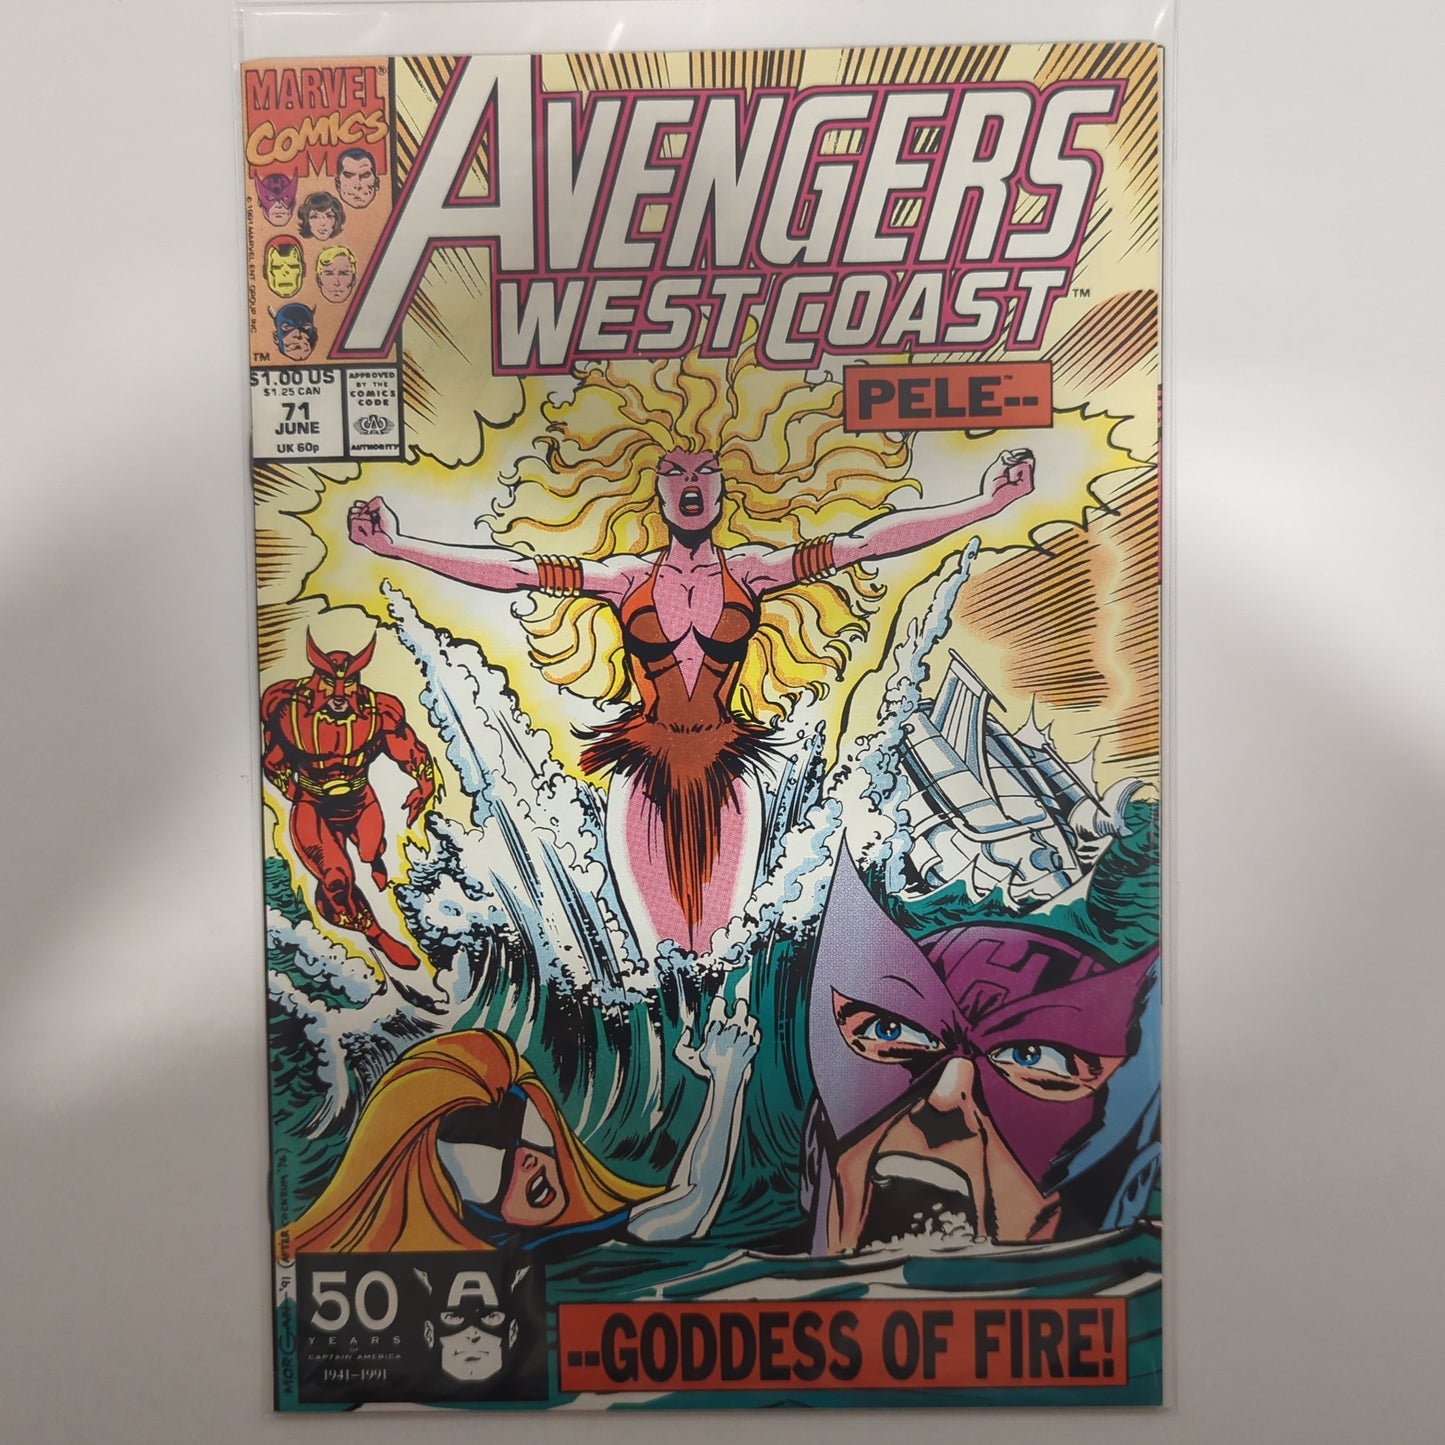 The West Coast Avengers #71